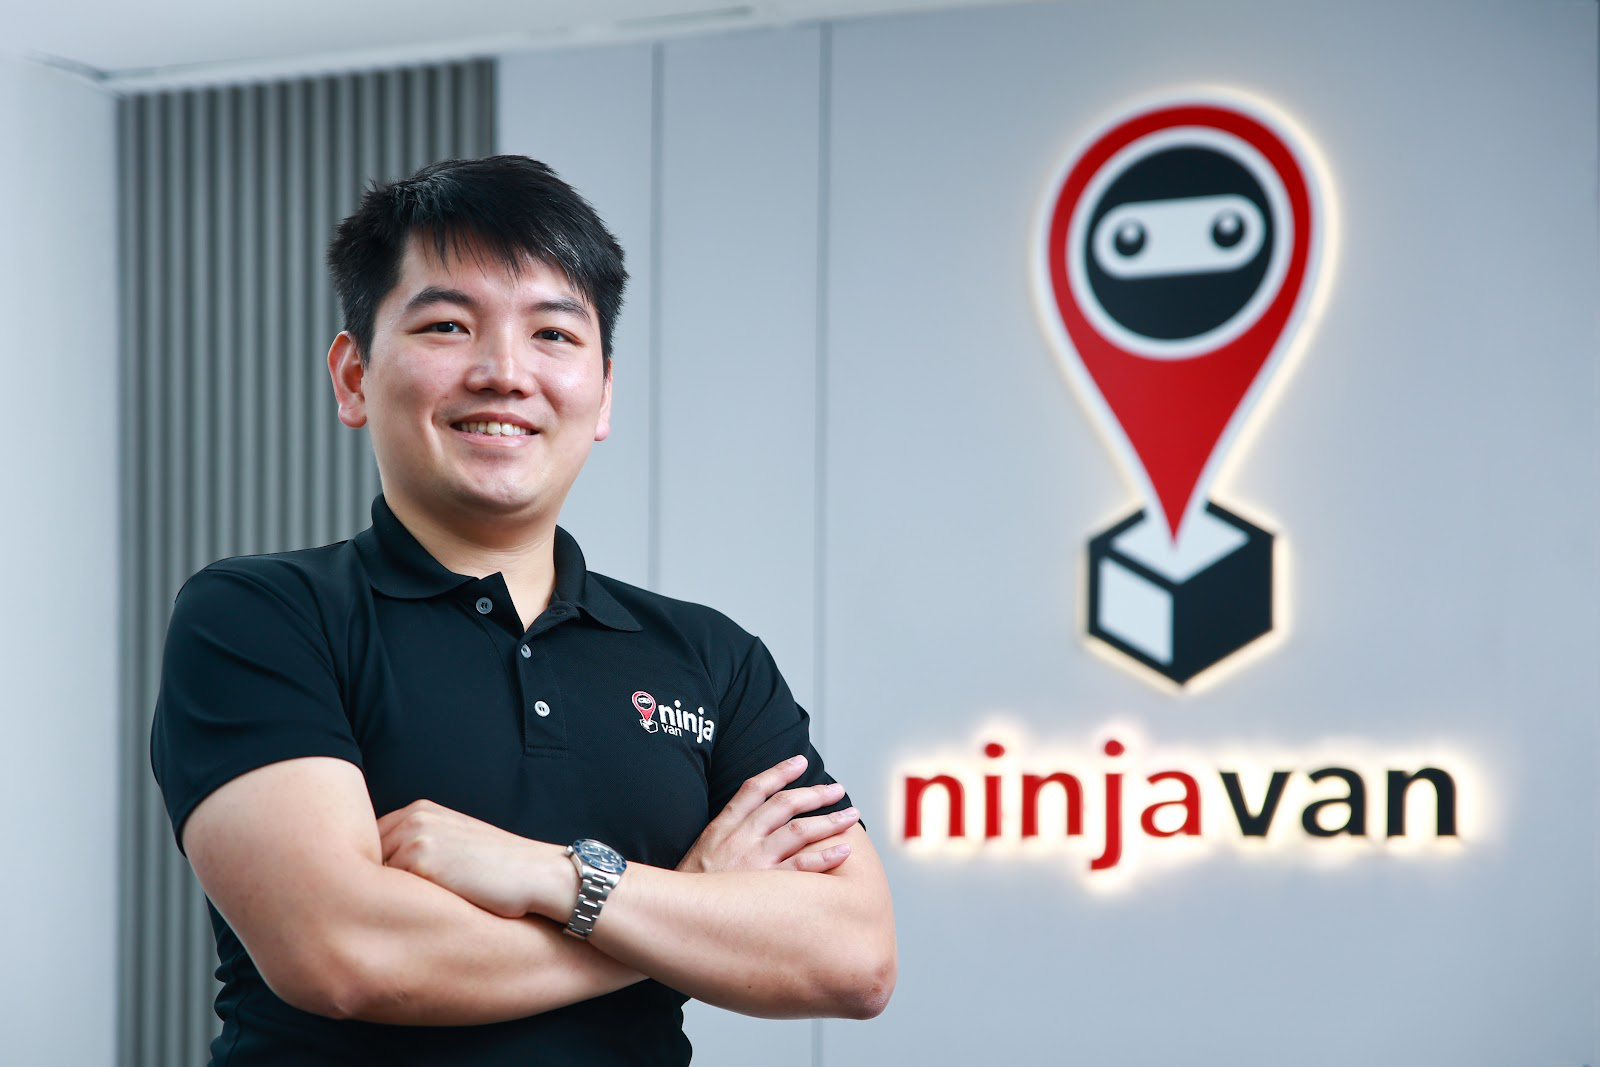 Ninja Van Malaysia 任命林正为新任首席执行官，这是一项战略举措亚洲数字新闻